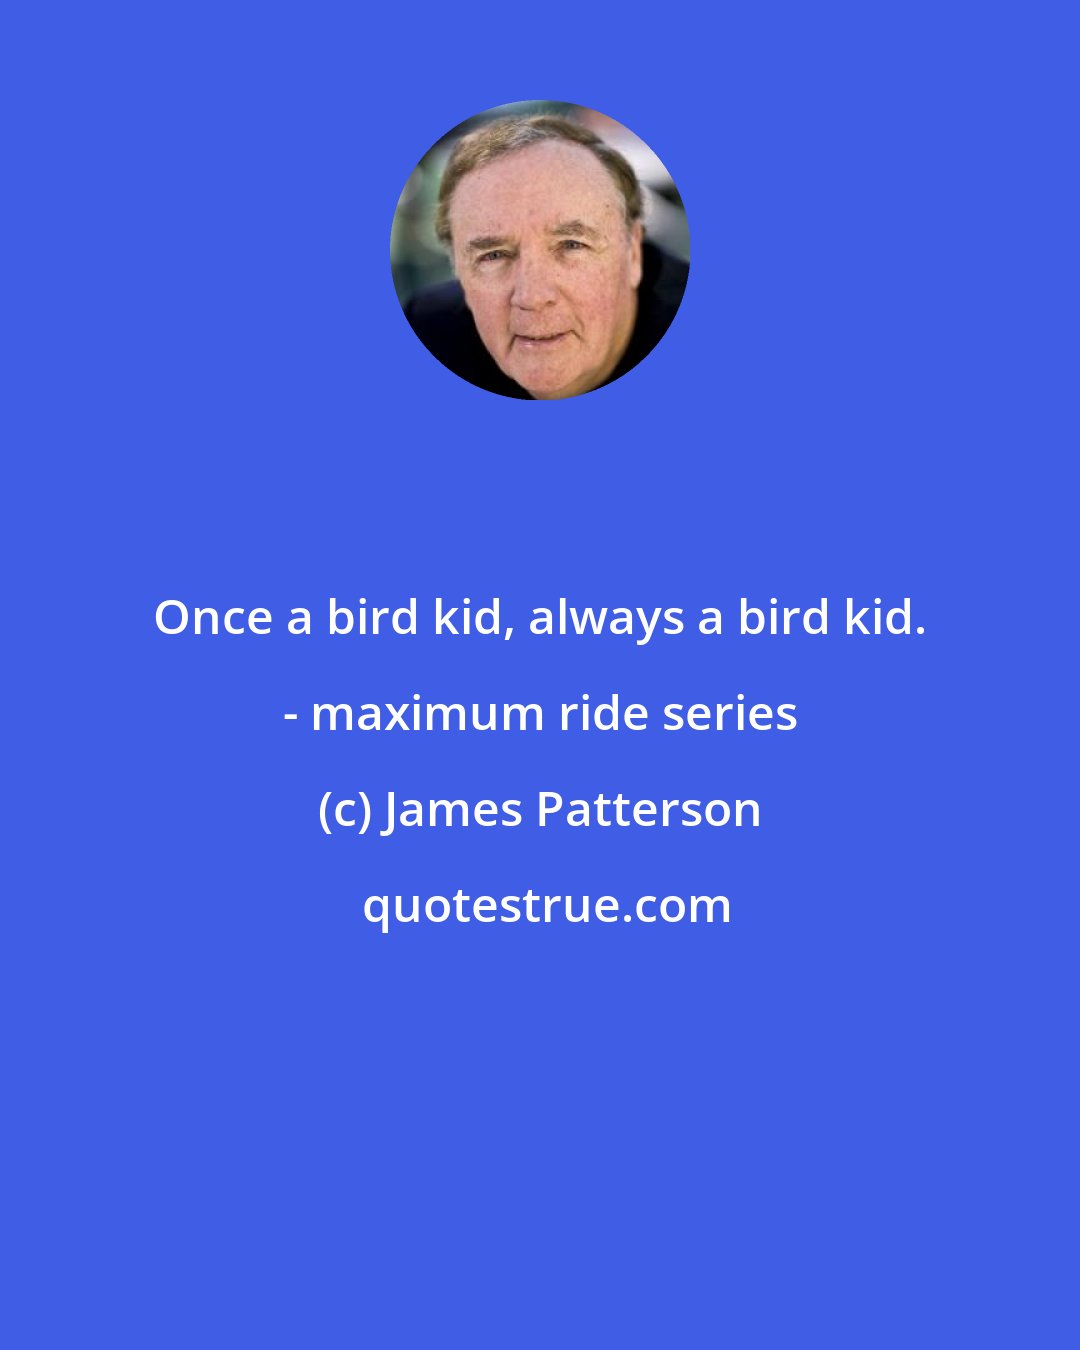 James Patterson: Once a bird kid, always a bird kid. - maximum ride series